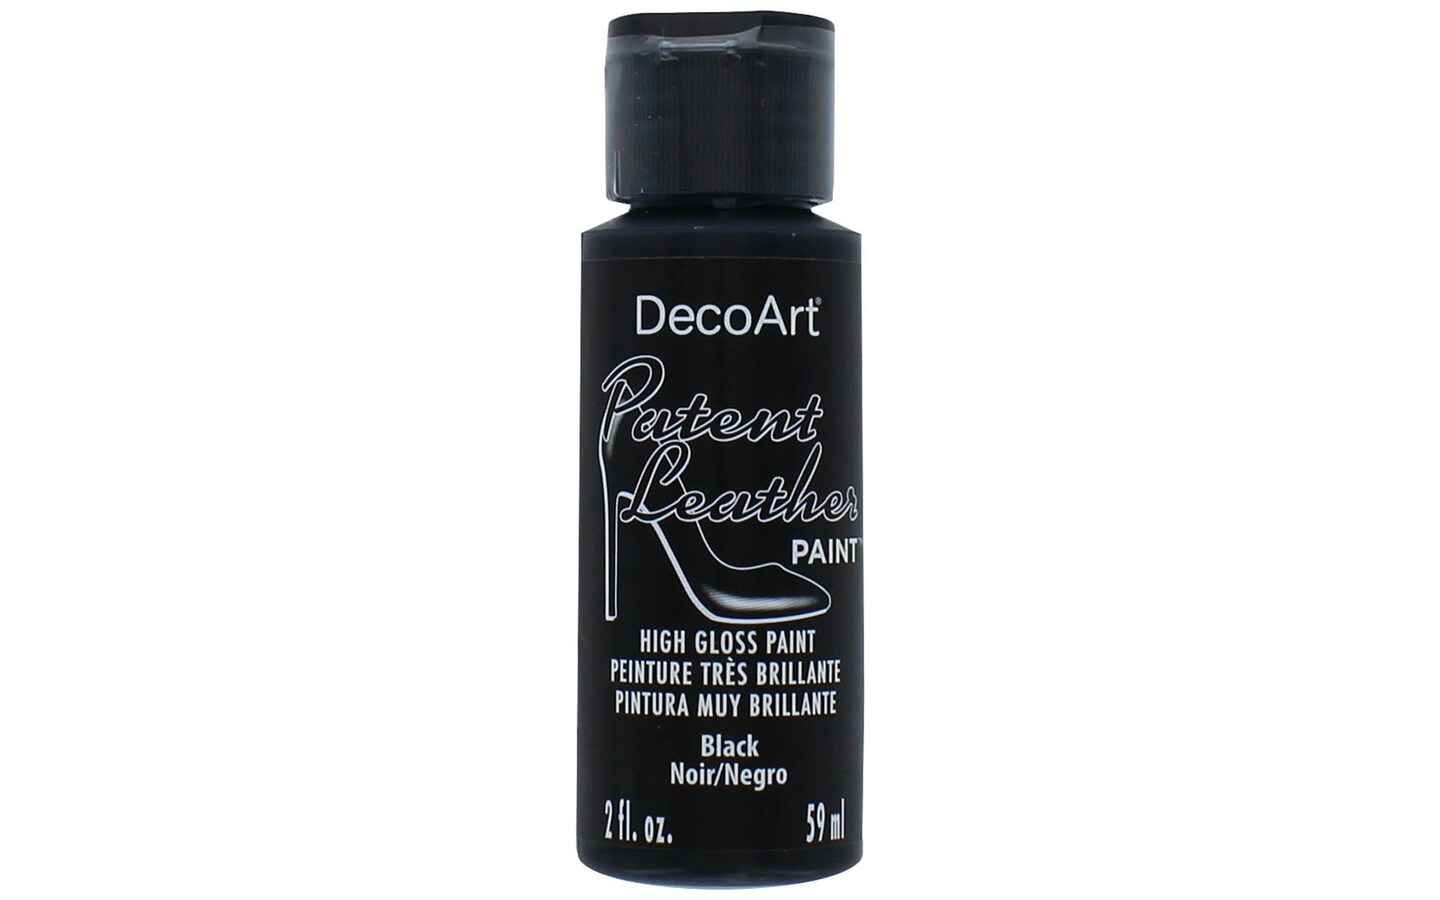 DecoArt Patent Leather